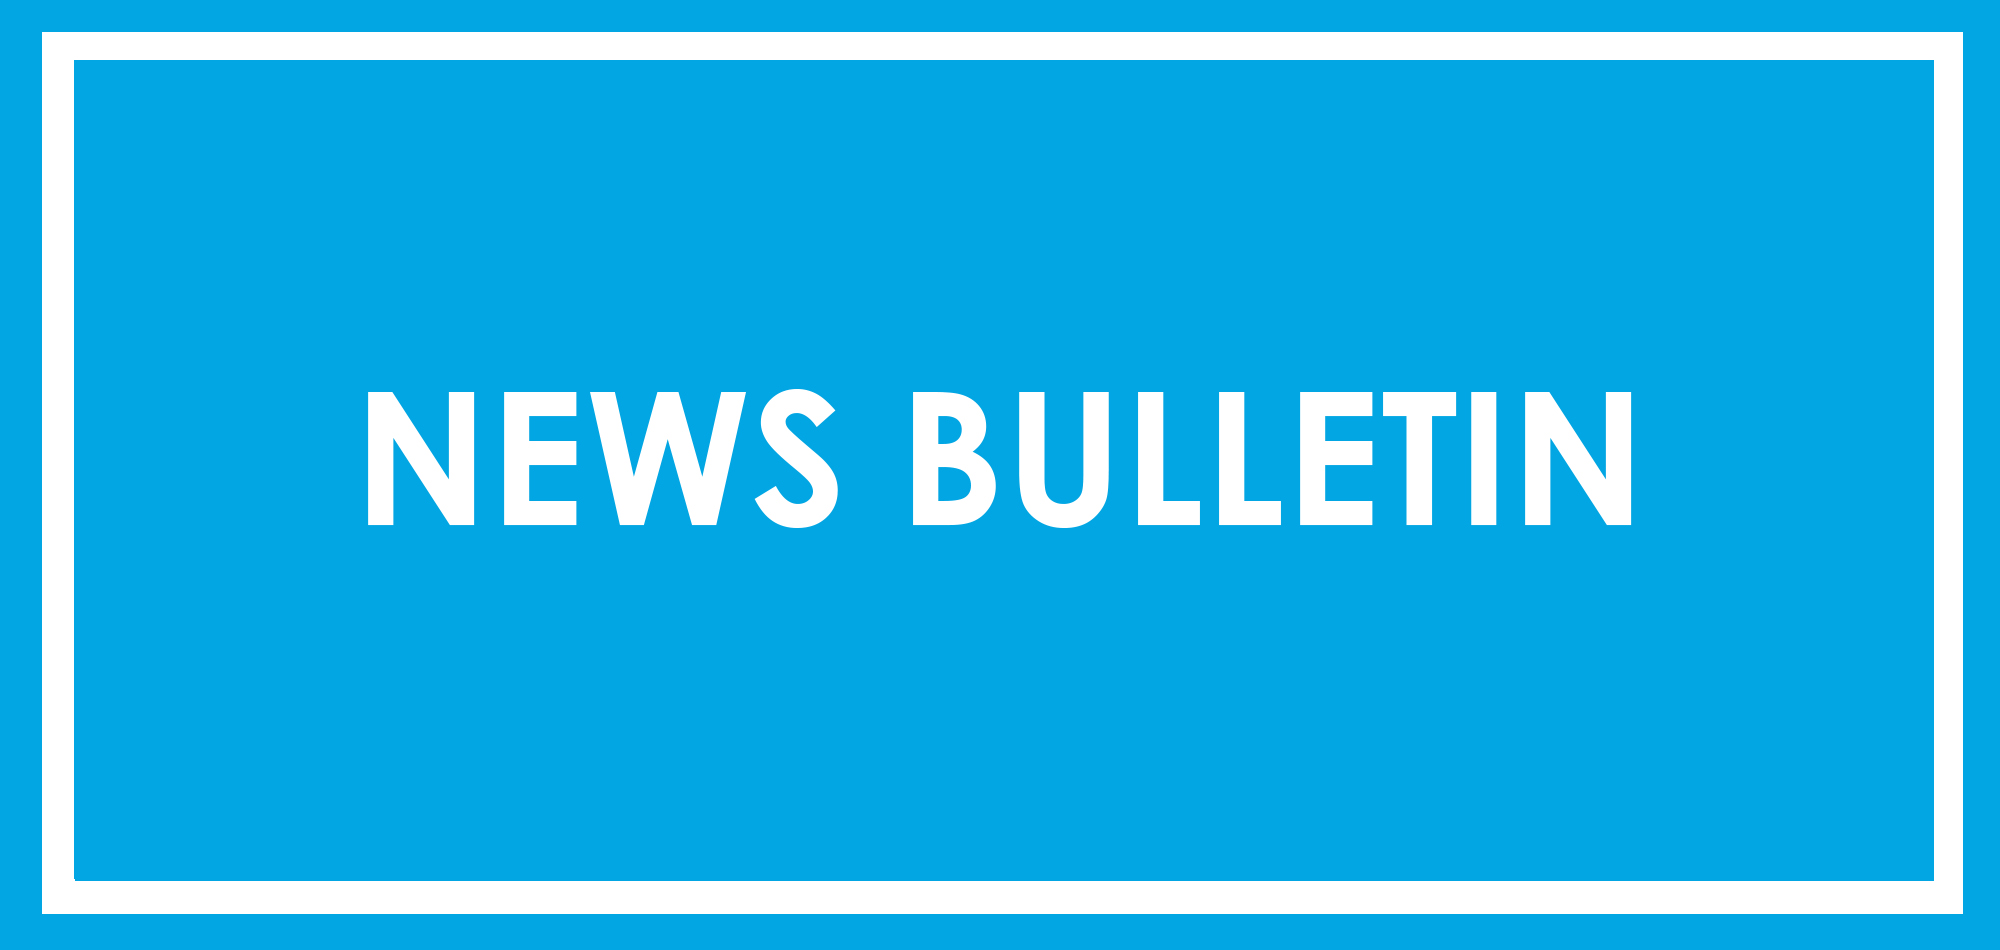 News Bulletin - 12.10.21